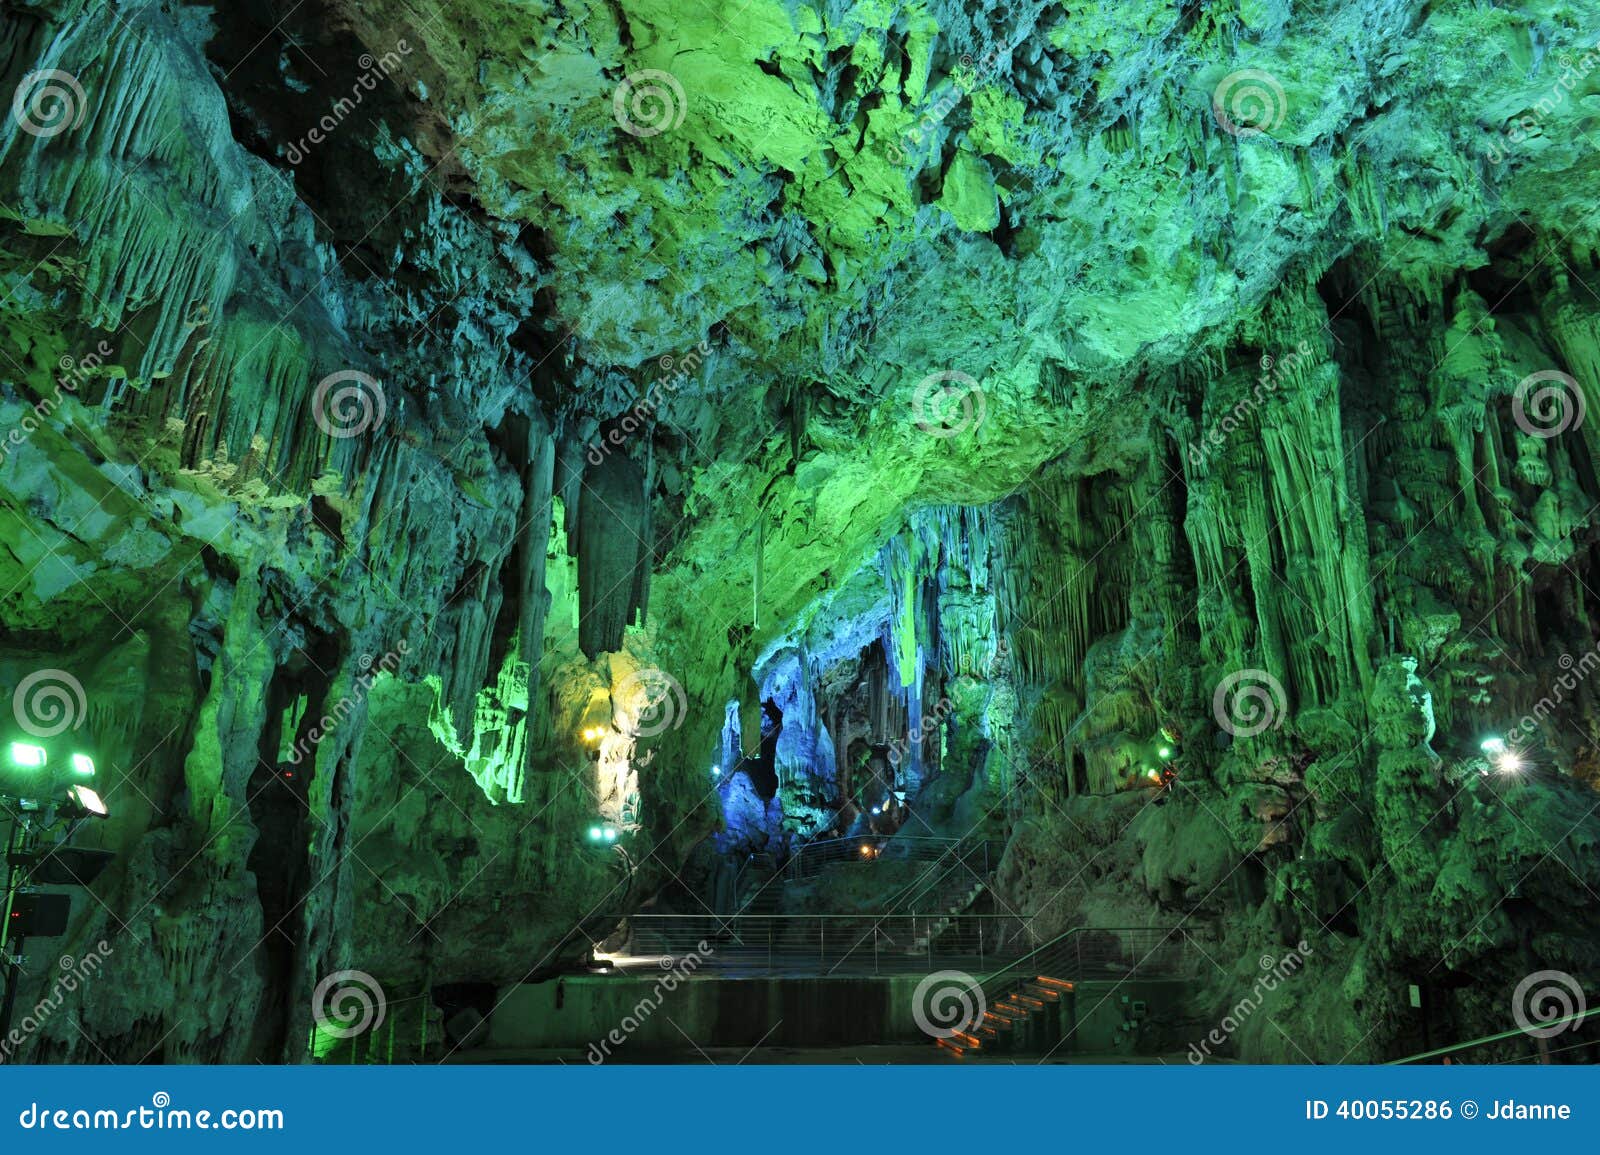 saint michaels cave, gibraltar